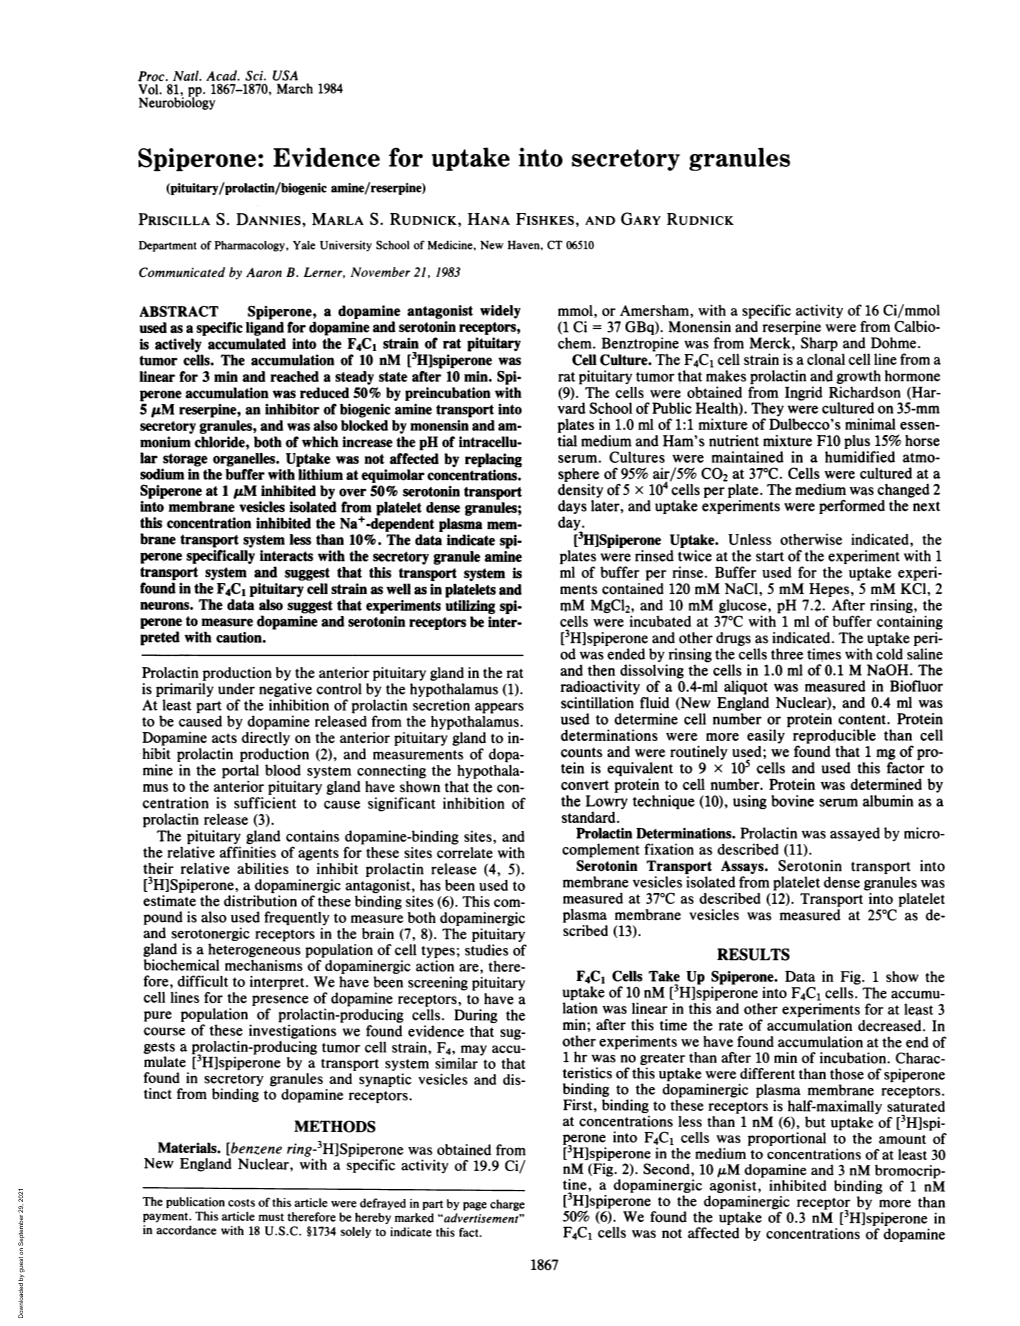 Spiperone: Evidence for Uptake Into Secretory Granules (Pituitary/Prolactin/Biogenic Amine/Reserpine) PRISCILLA S